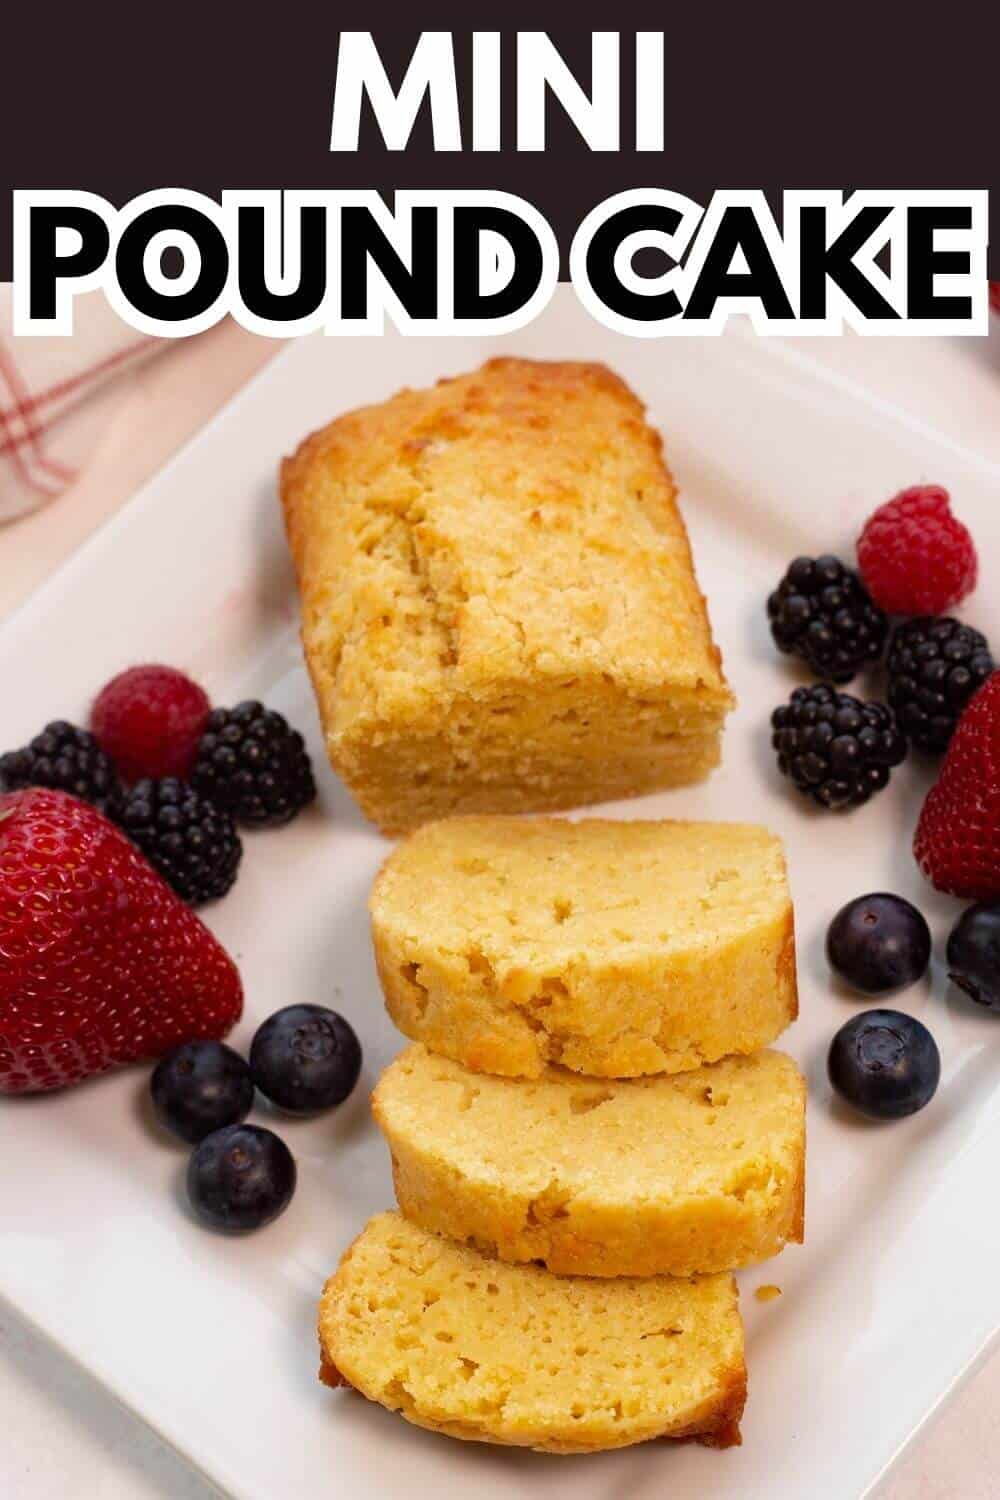 Mini pound cake with recipe title text.